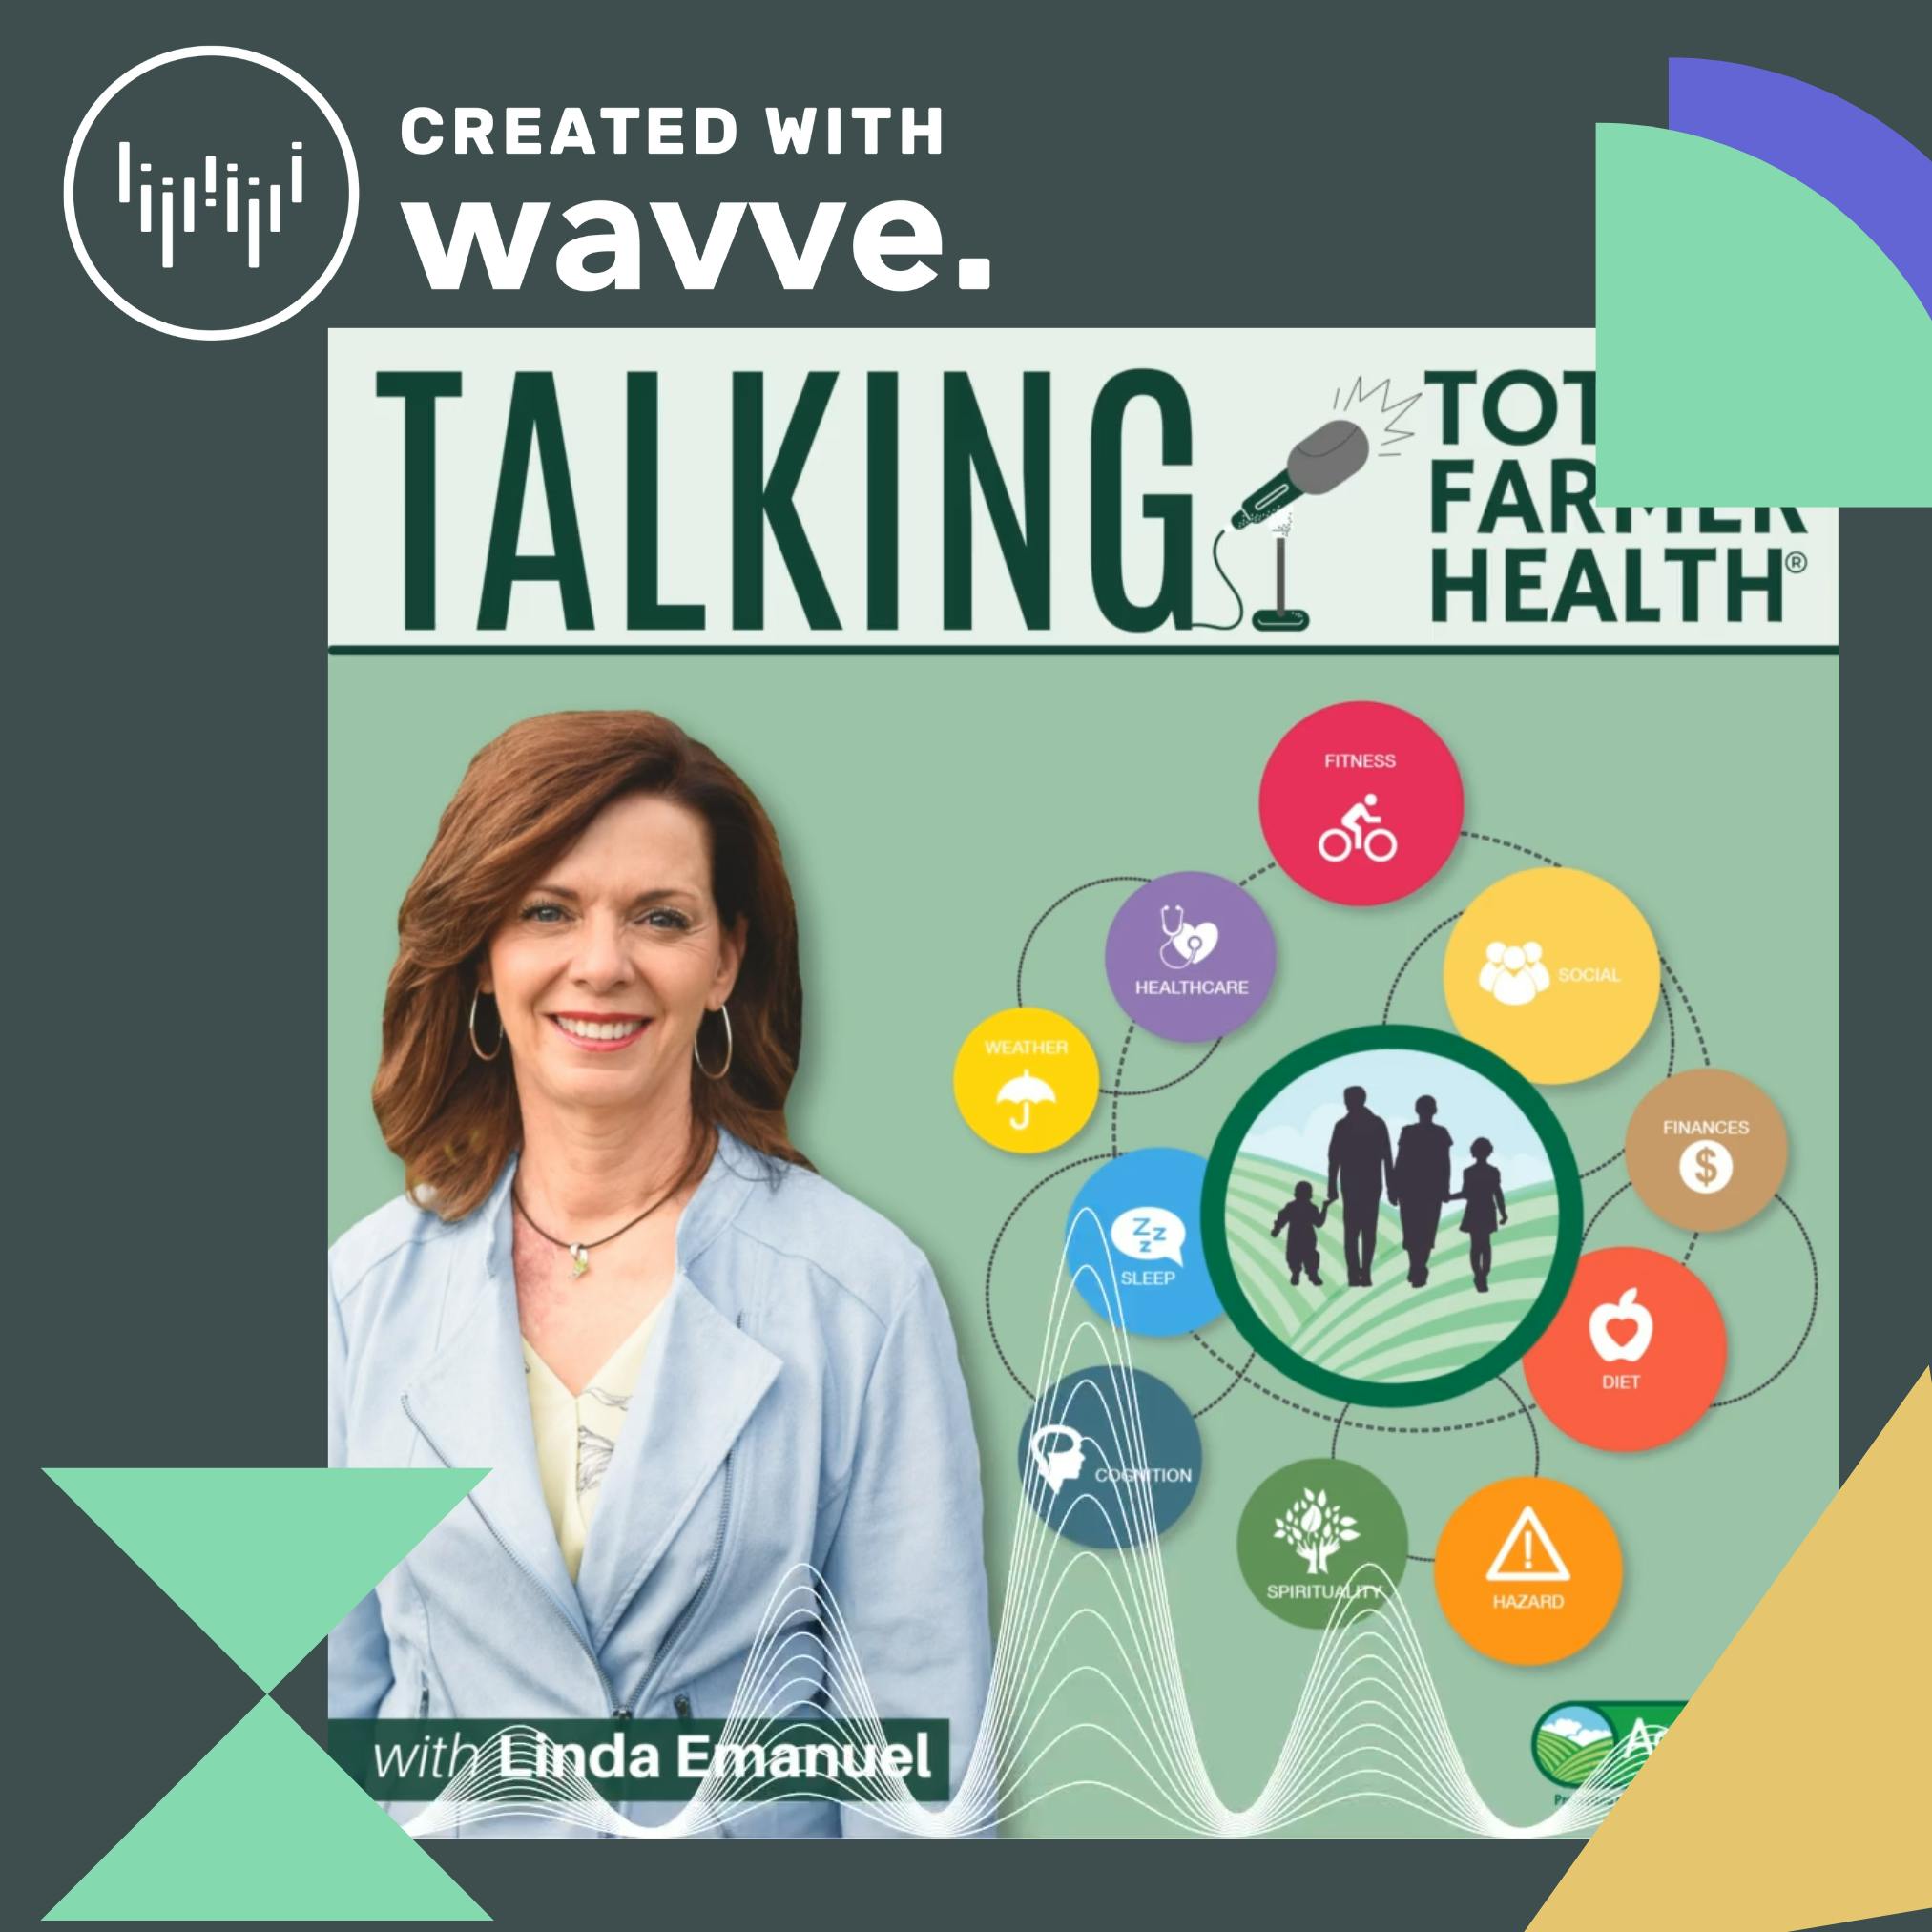 Design for the Total Farmer Health Podcast